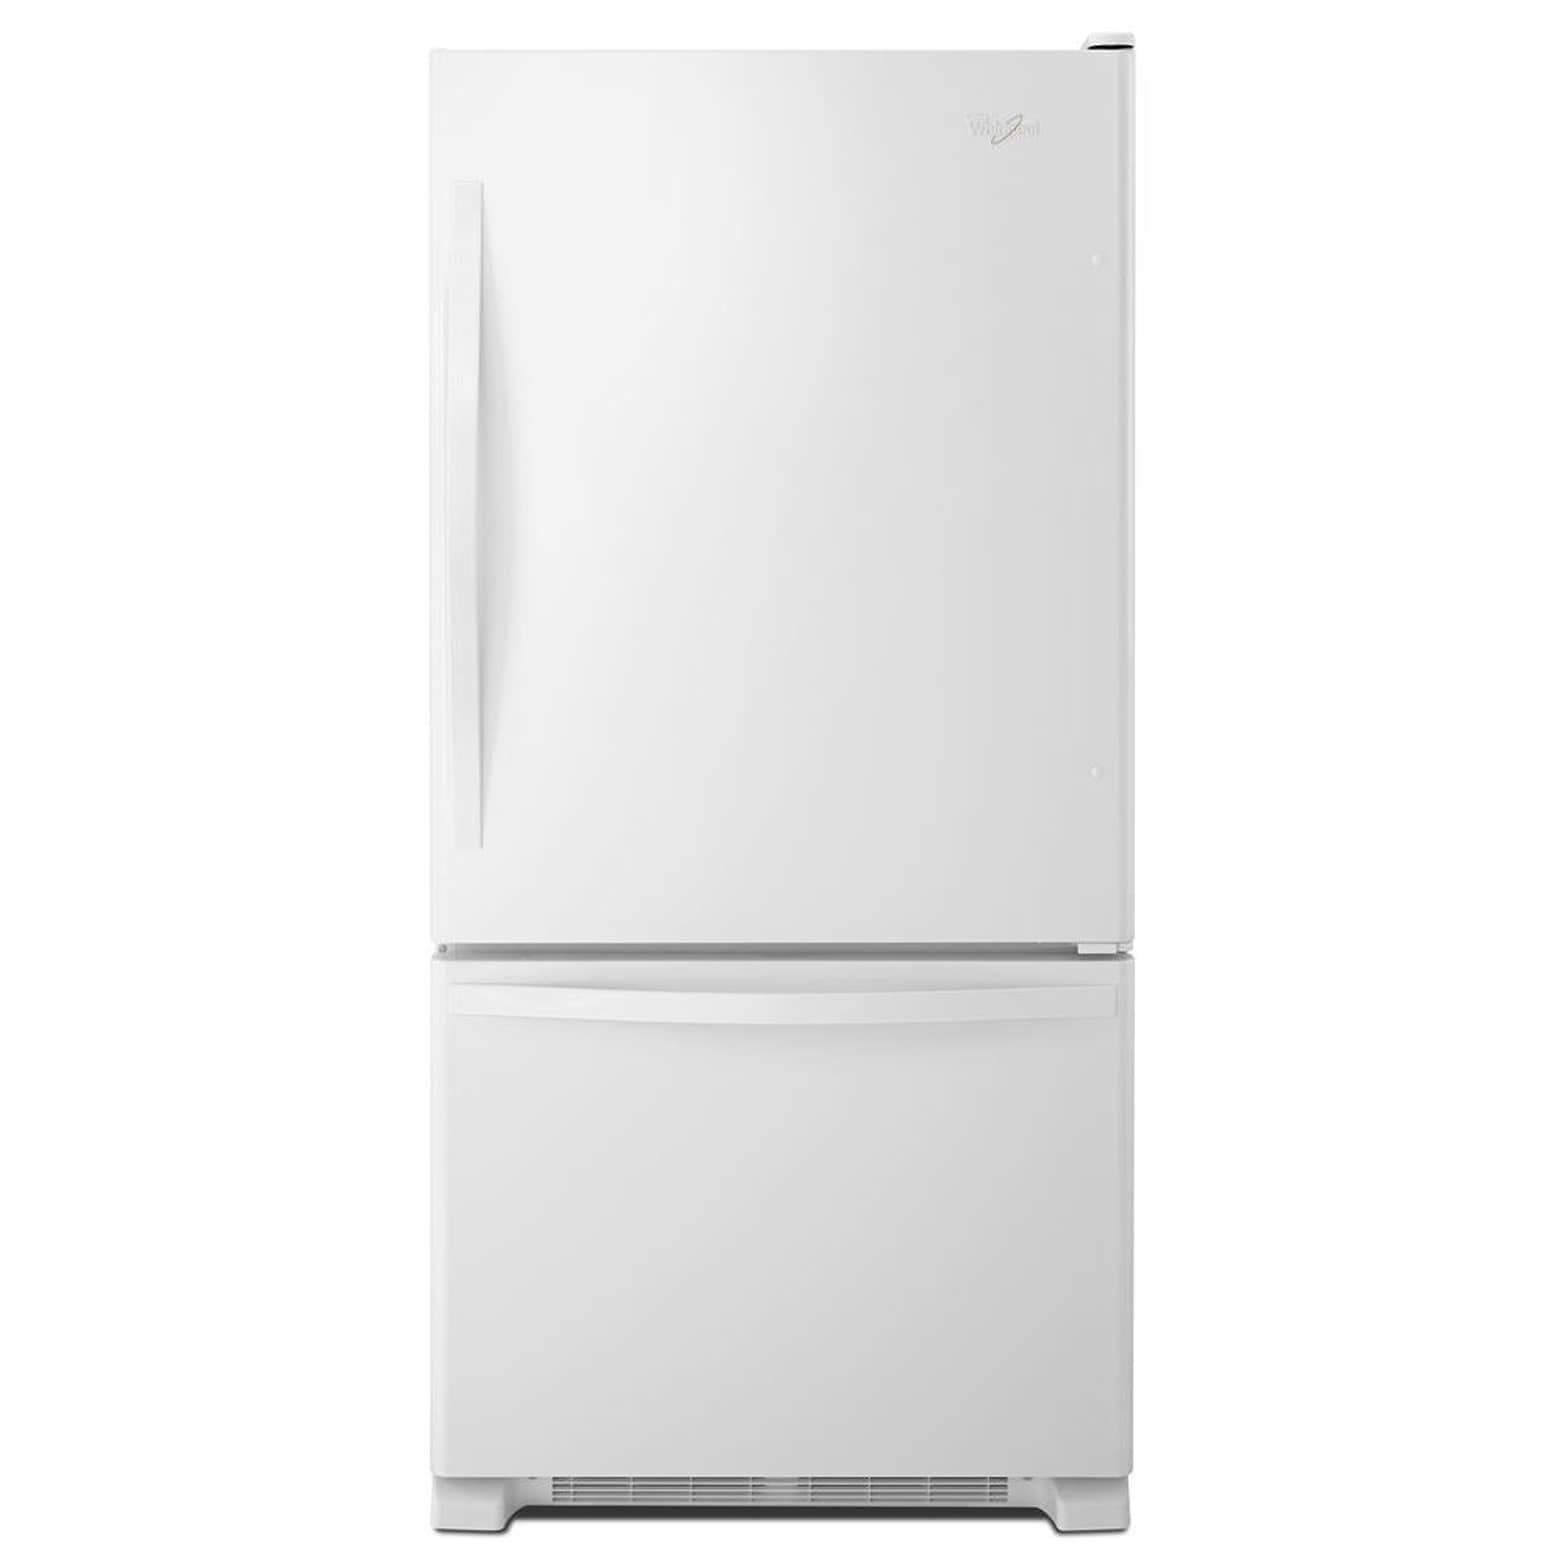 2166261 Whirlpool Refrigerator Ice Bin